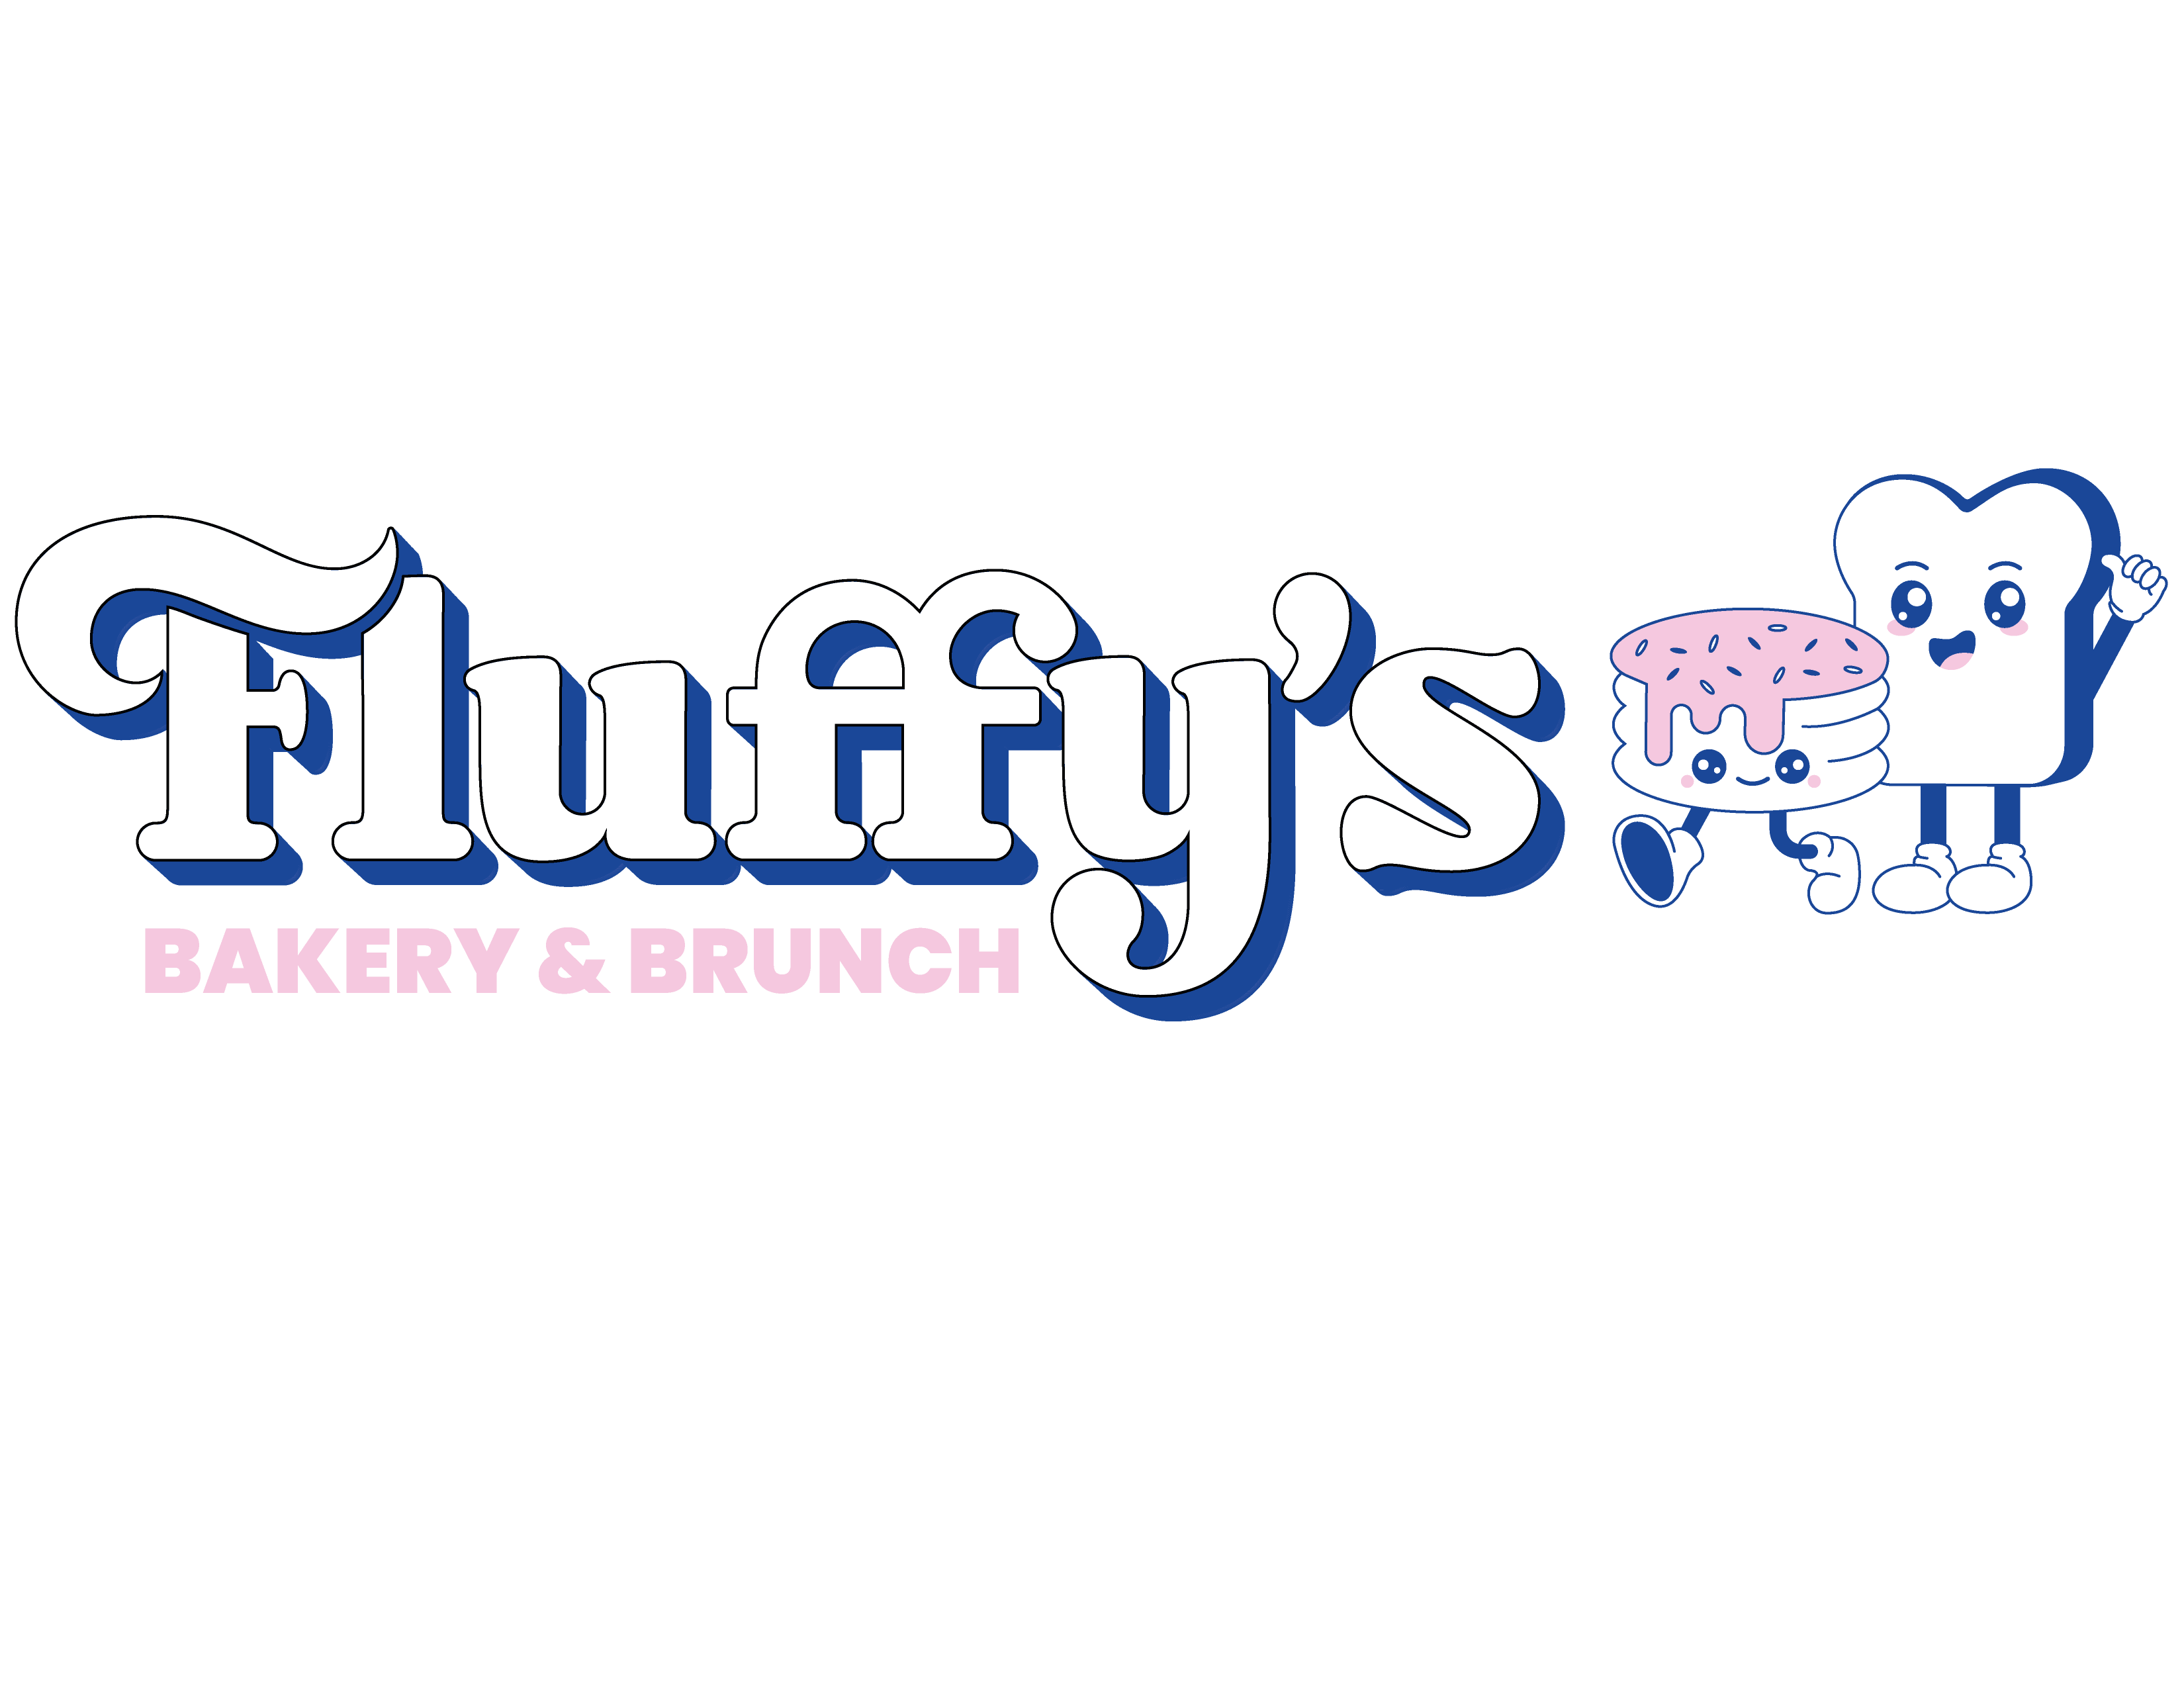 FLUFFY'S